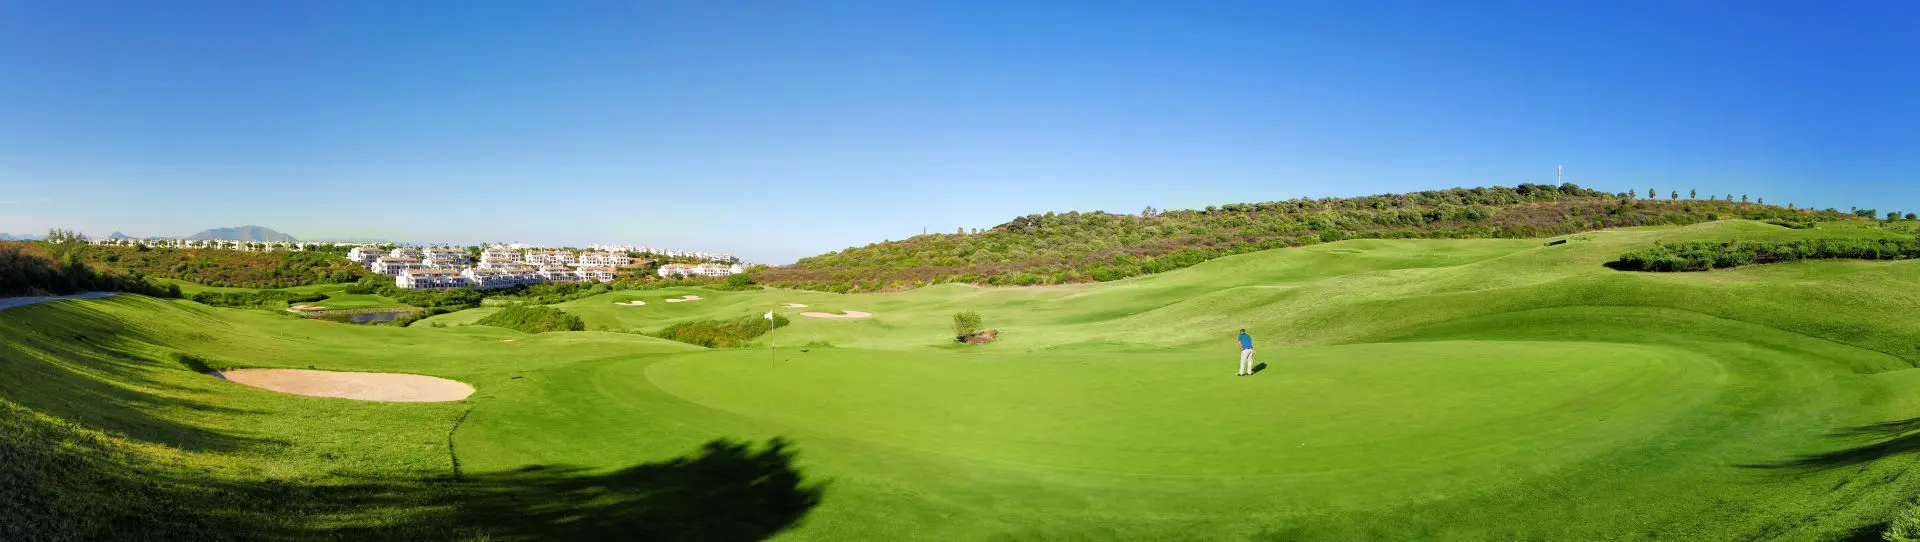 Spain golf courses - La Hacienda Alcaidesa Heathland Golf - Photo 3